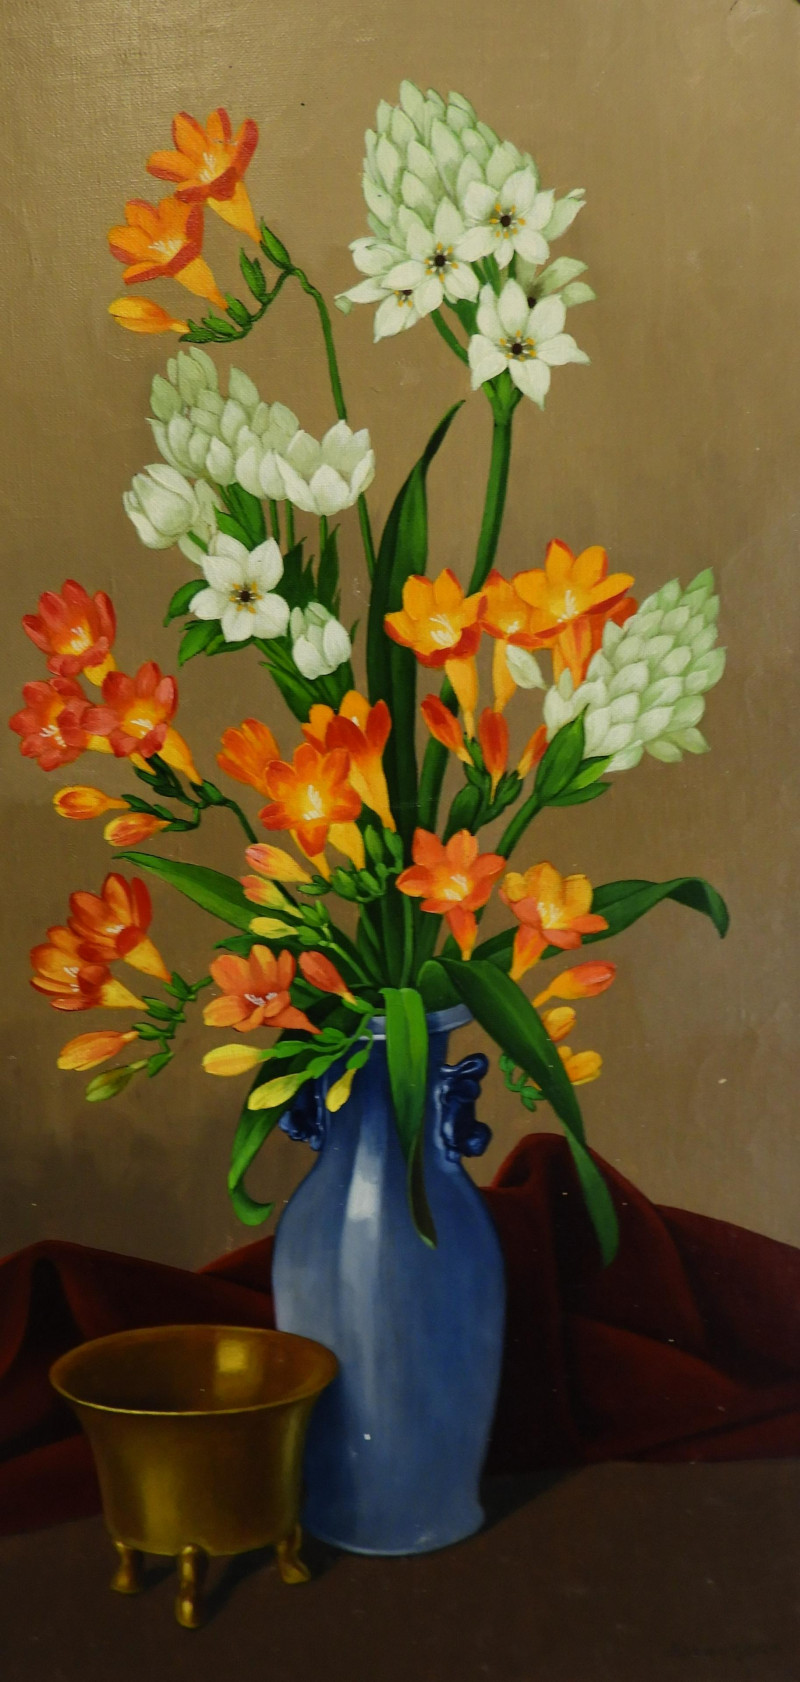 Joan B. N. Van Gent - Floral Still Life